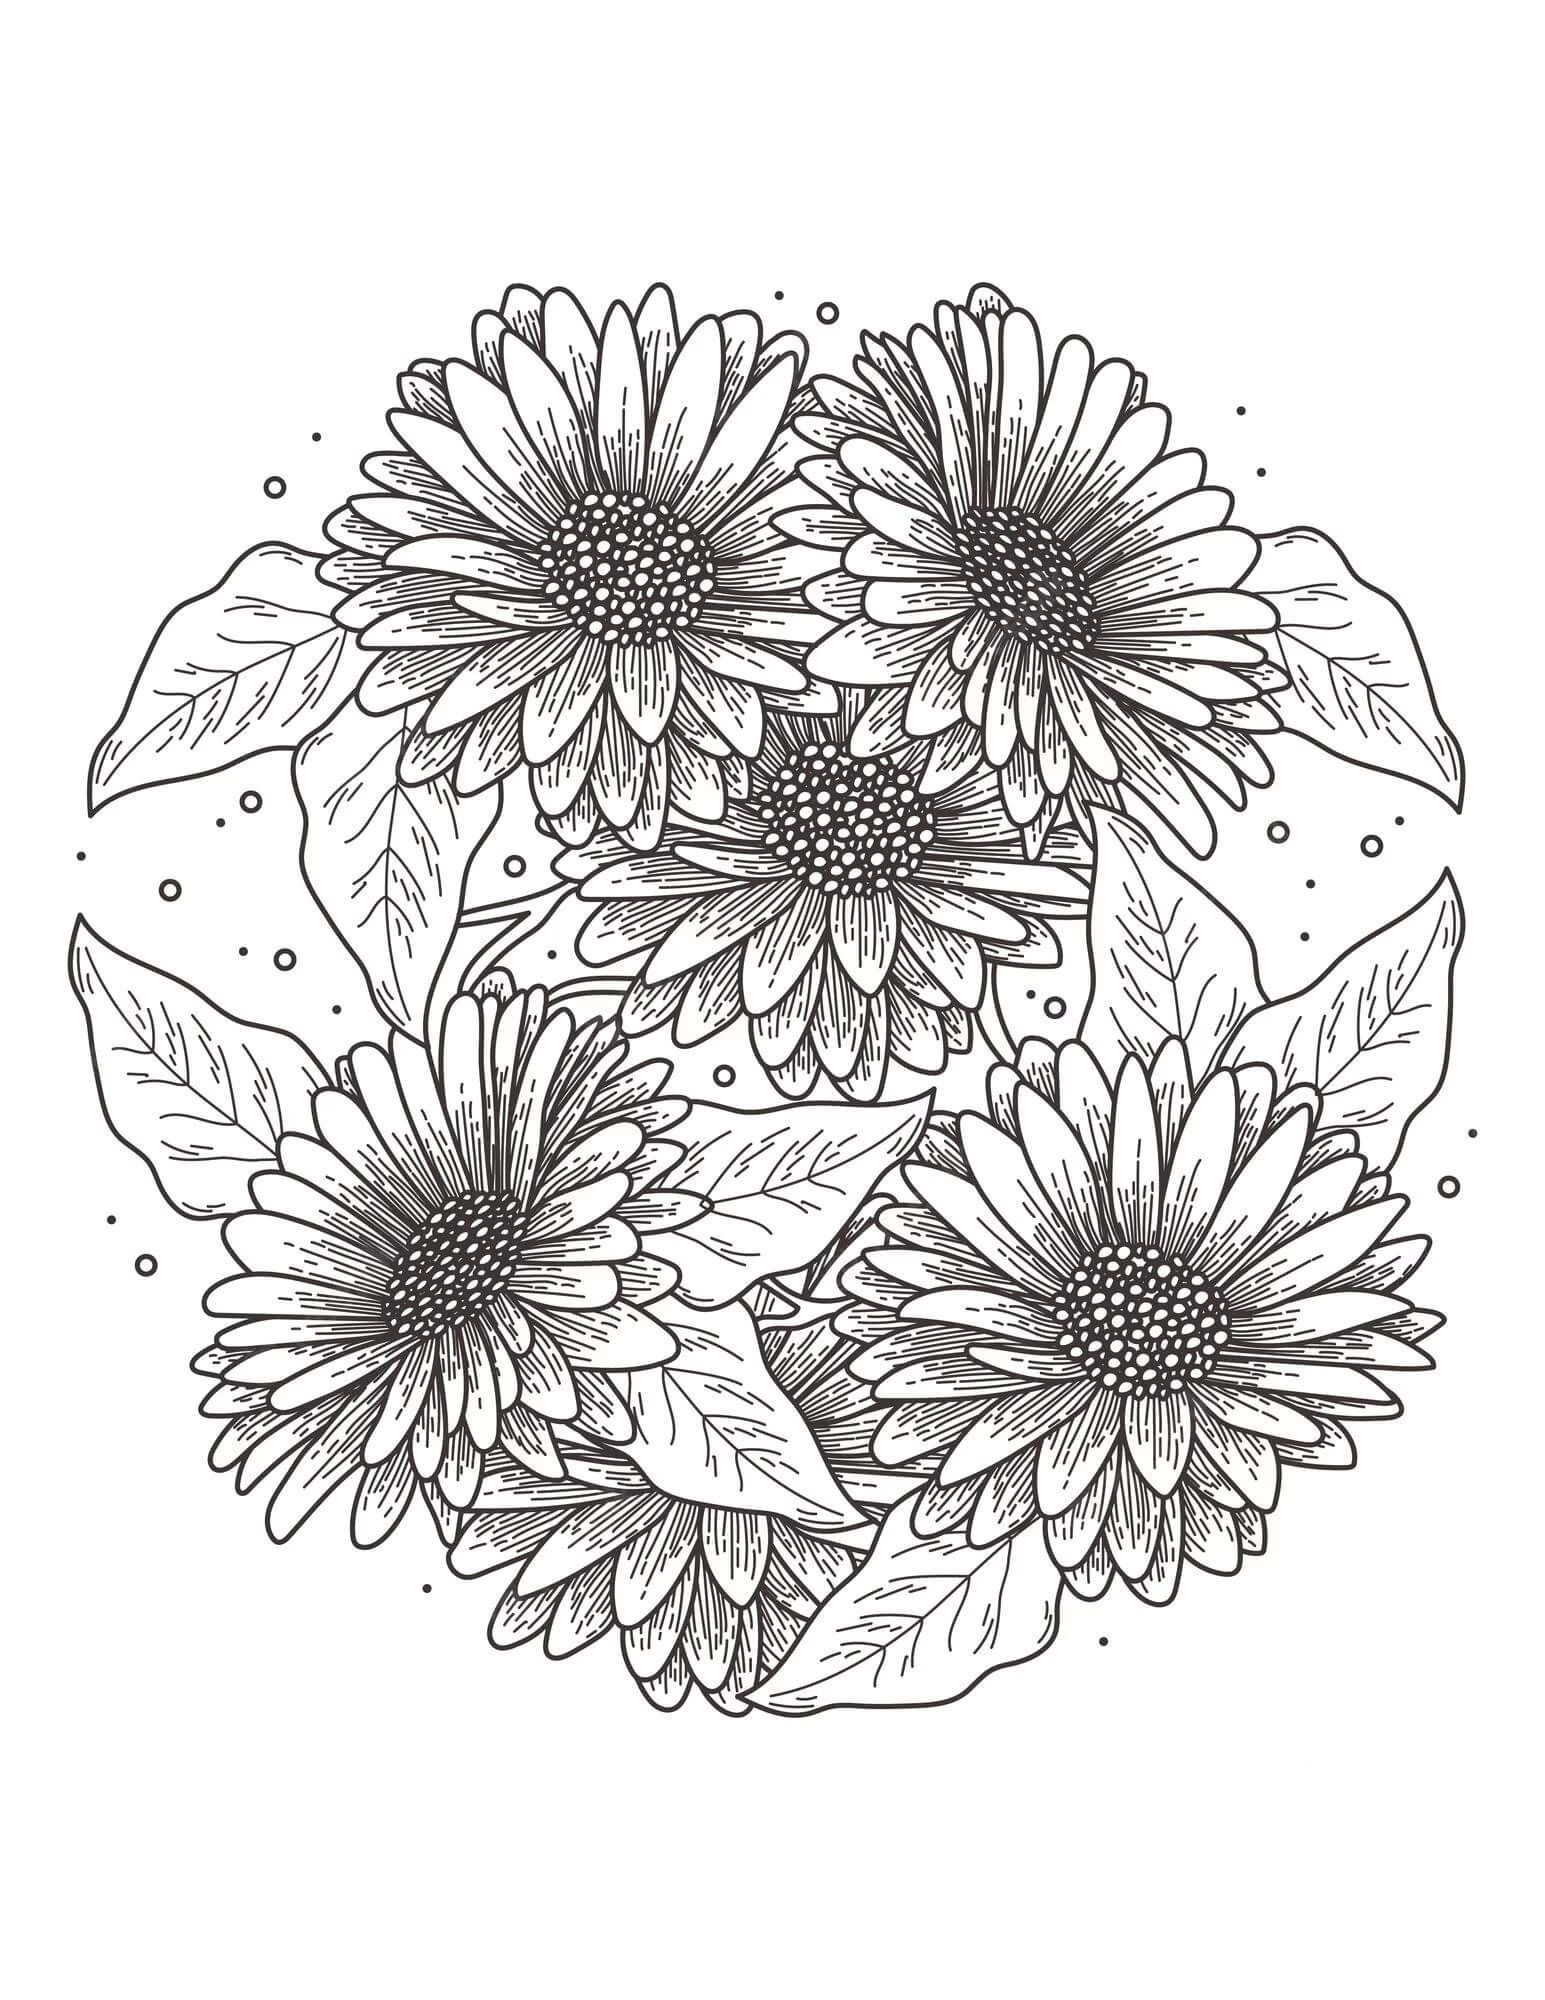 Mandala Sunflower Coloring Page - Sheet 5 Mandalas